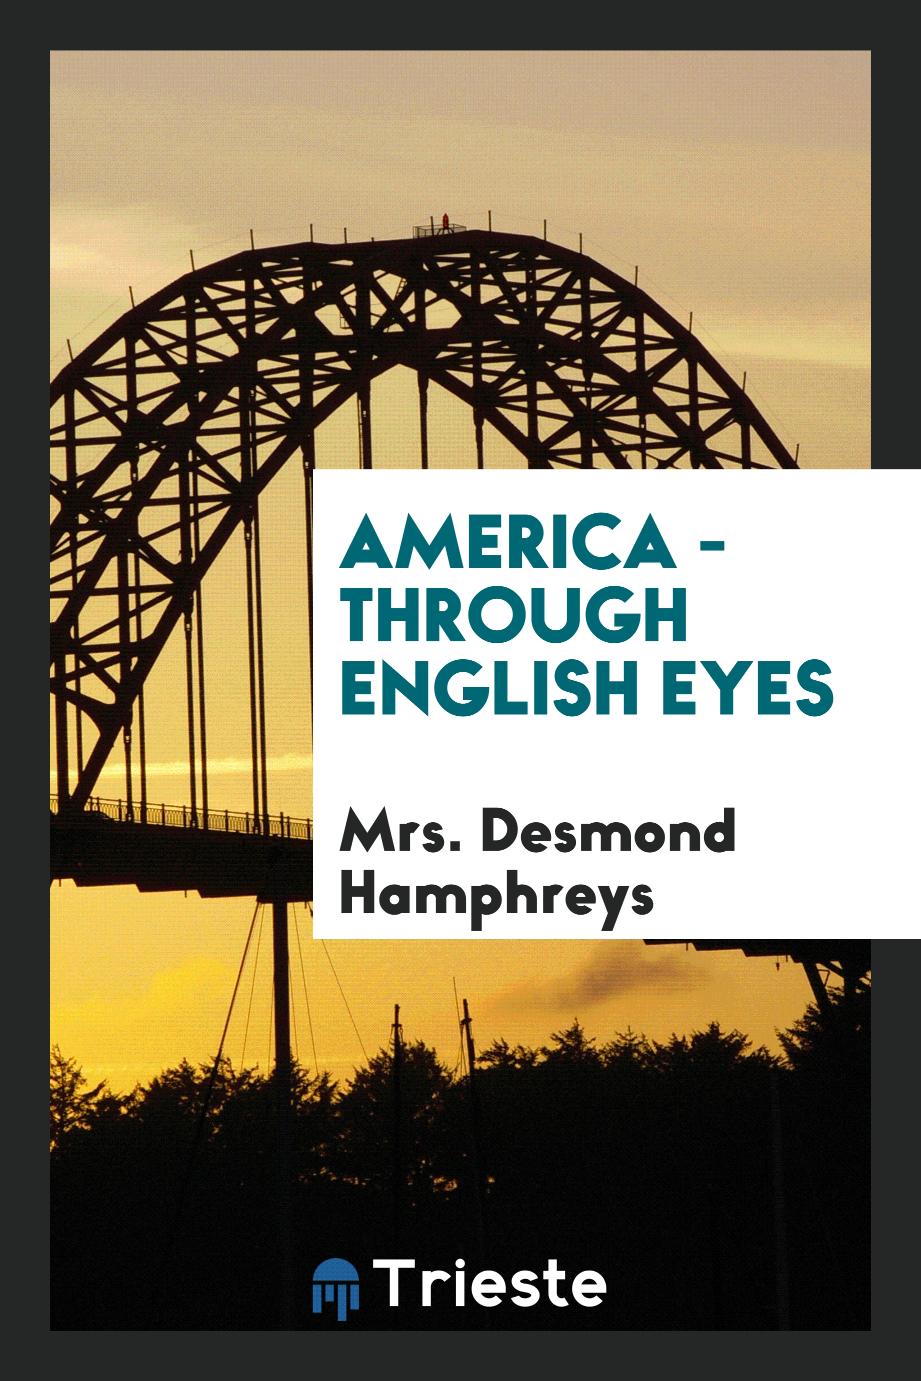 America - through English eyes